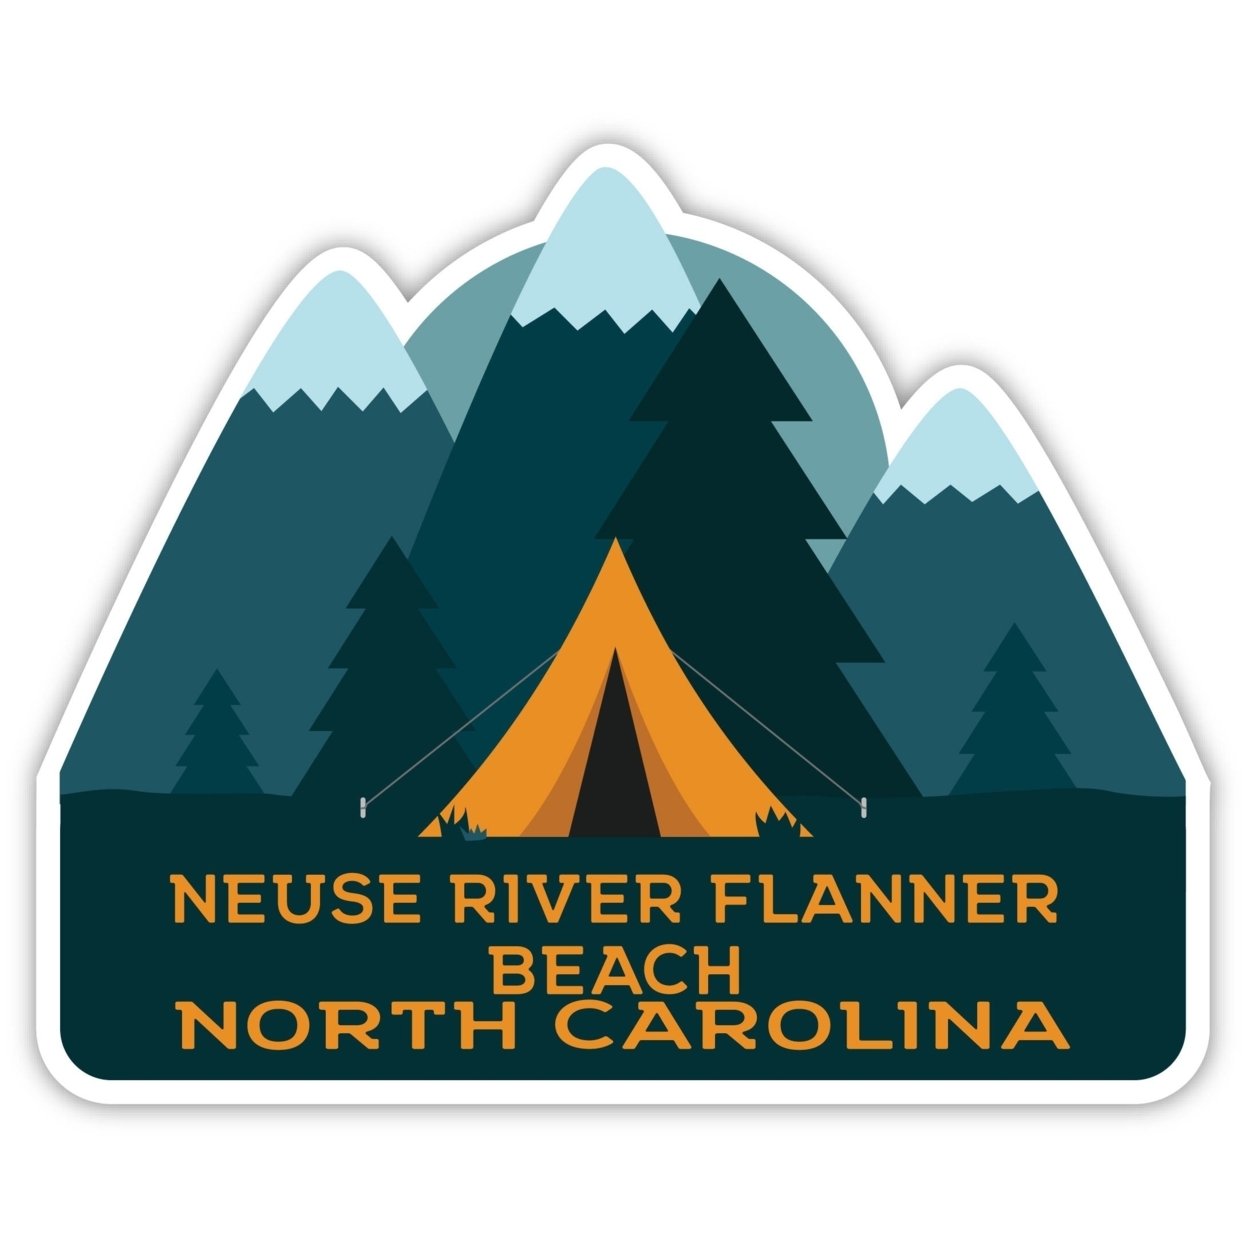 Neuse River Flanner Beach North Carolina Souvenir Decorative Stickers (Choose Theme And Size) - Single Unit, 2-Inch, Tent